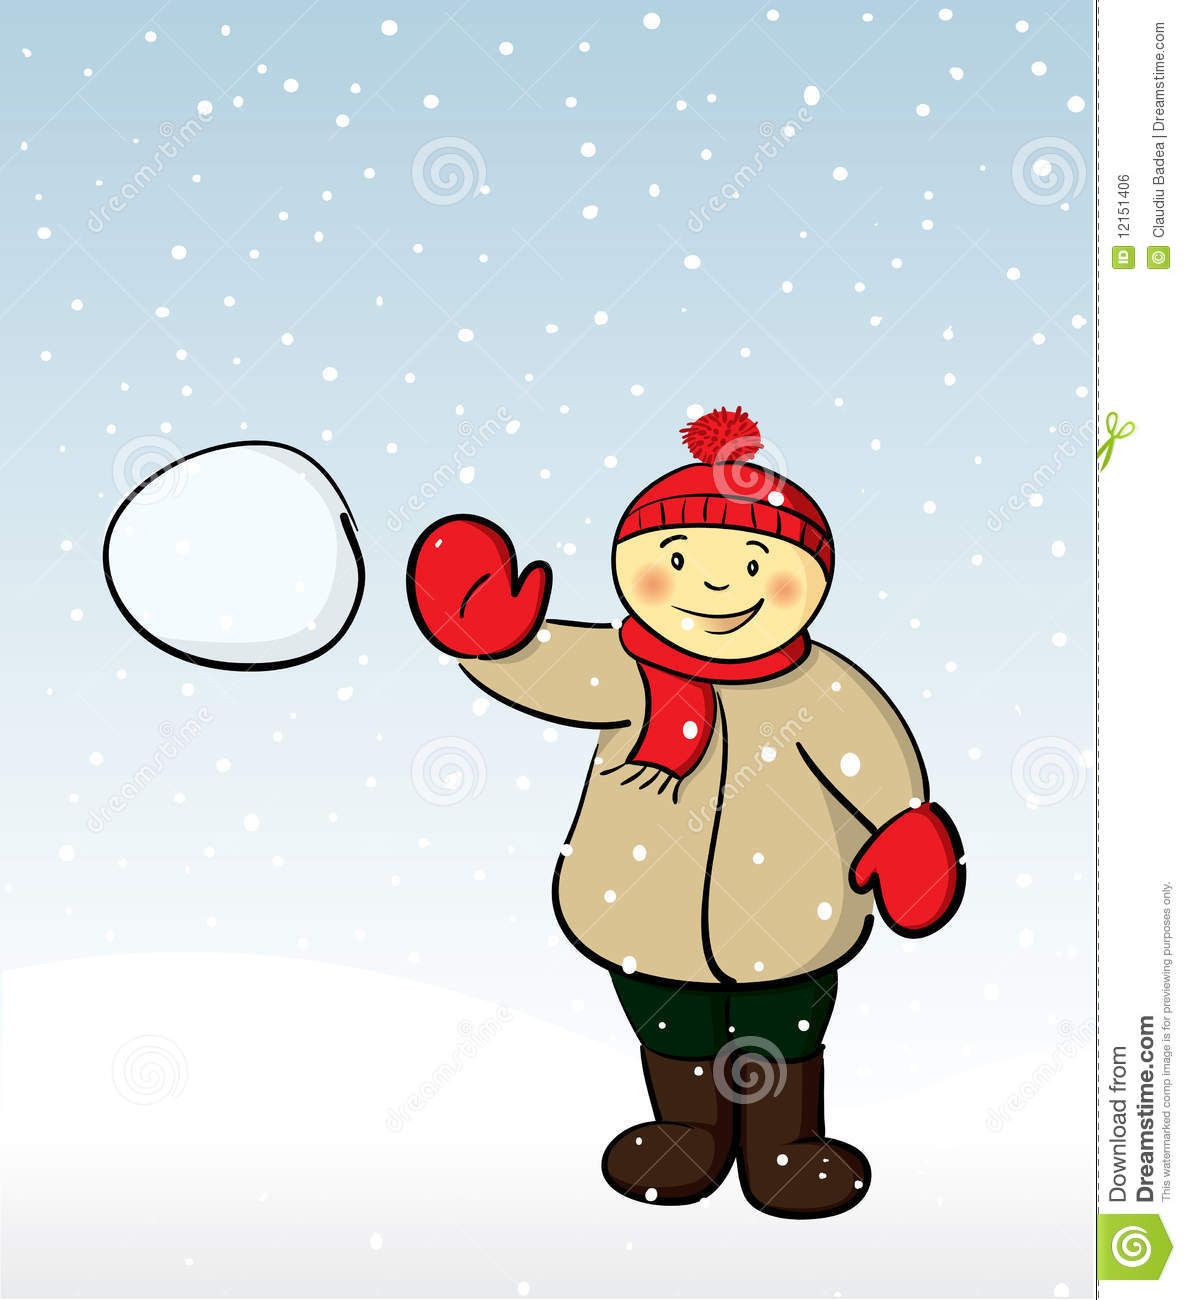 Boy Throwing Snowball Royalty Free Stock Image   Image  12151406